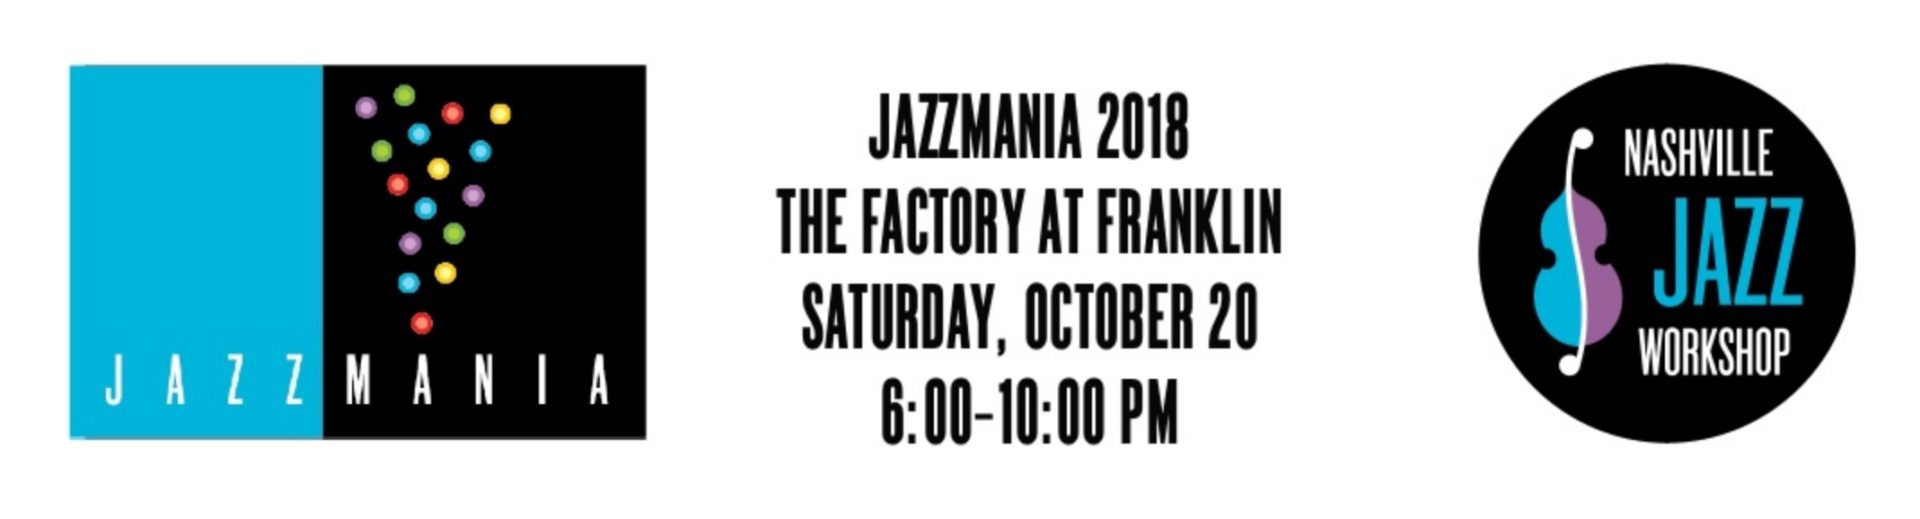 Nashville Jazz Workshop – Jazzmania 2018 Franklin, TN